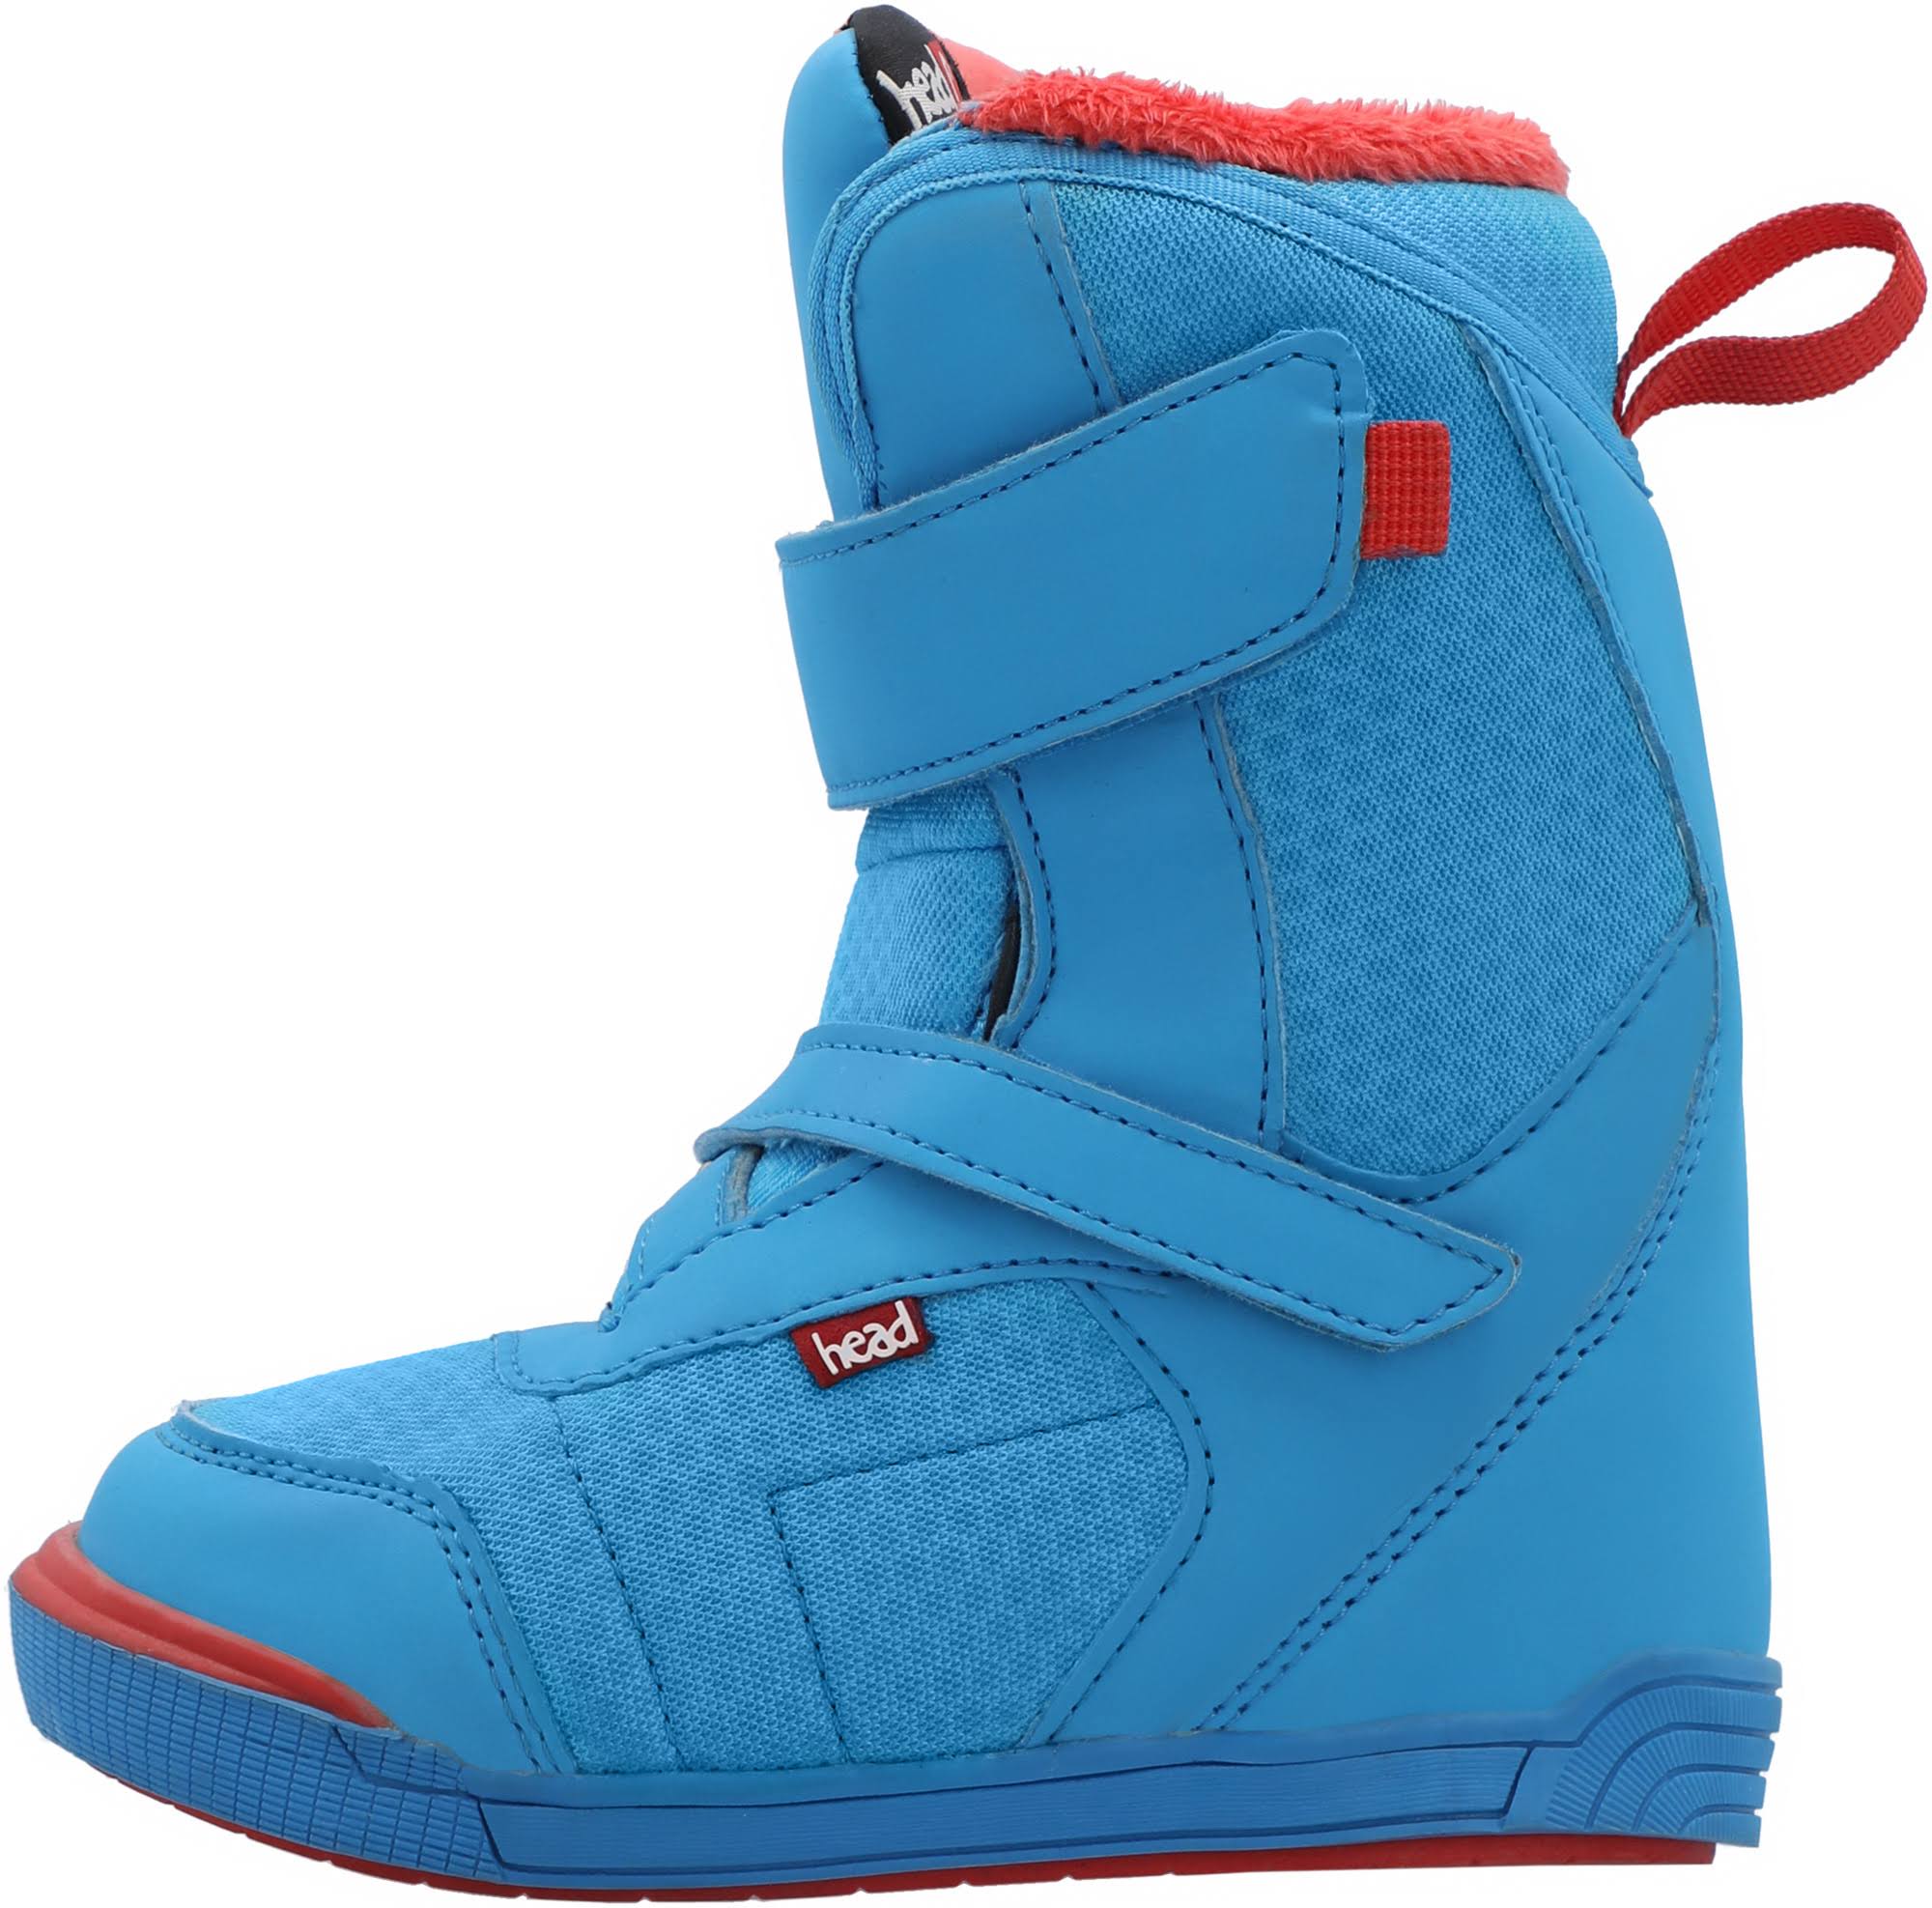 Head Velcro Kid's Snowboard Boots